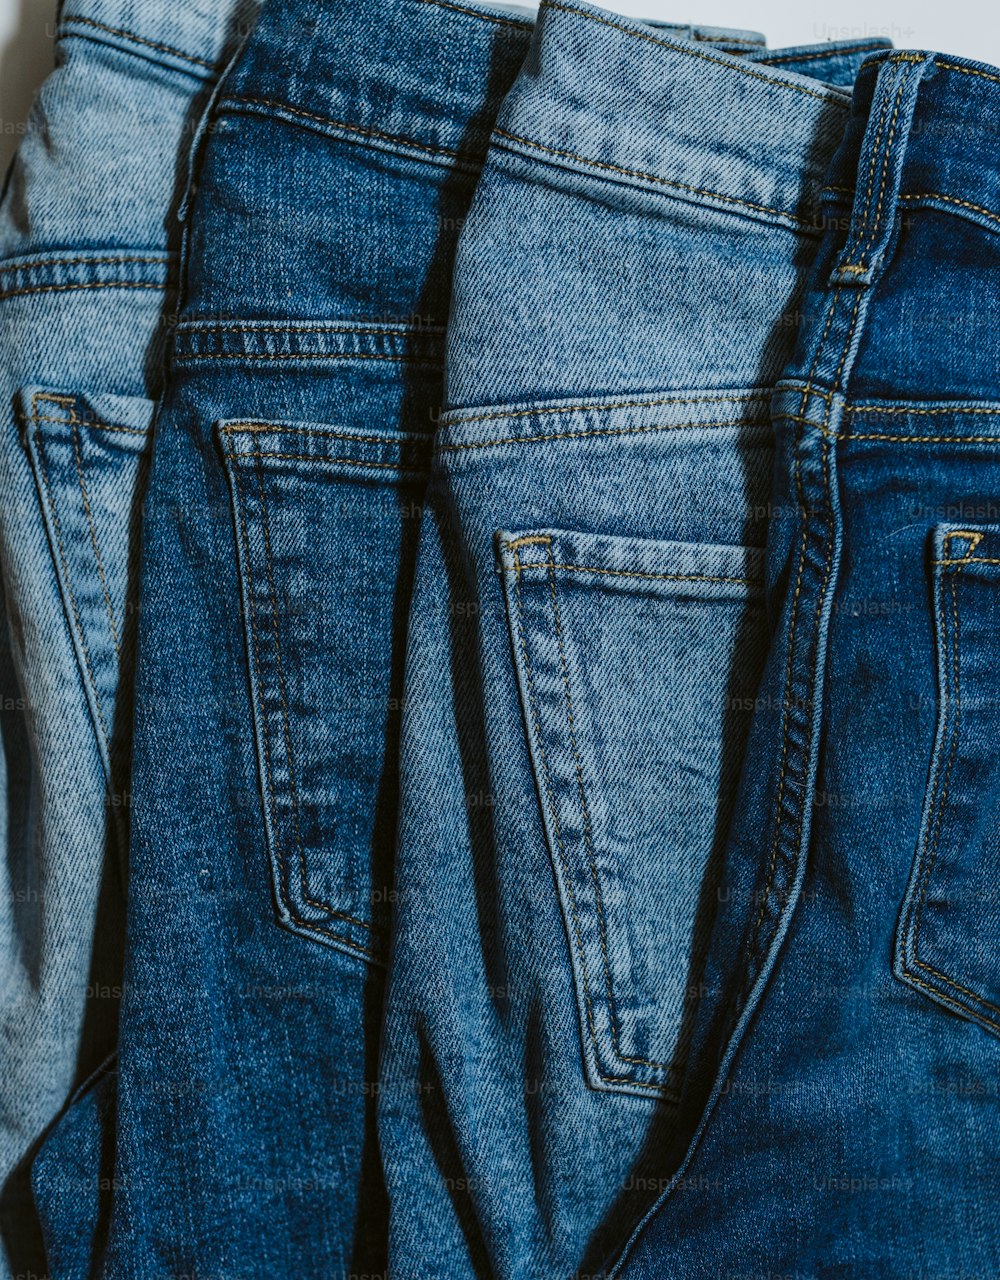 denim blue jeans